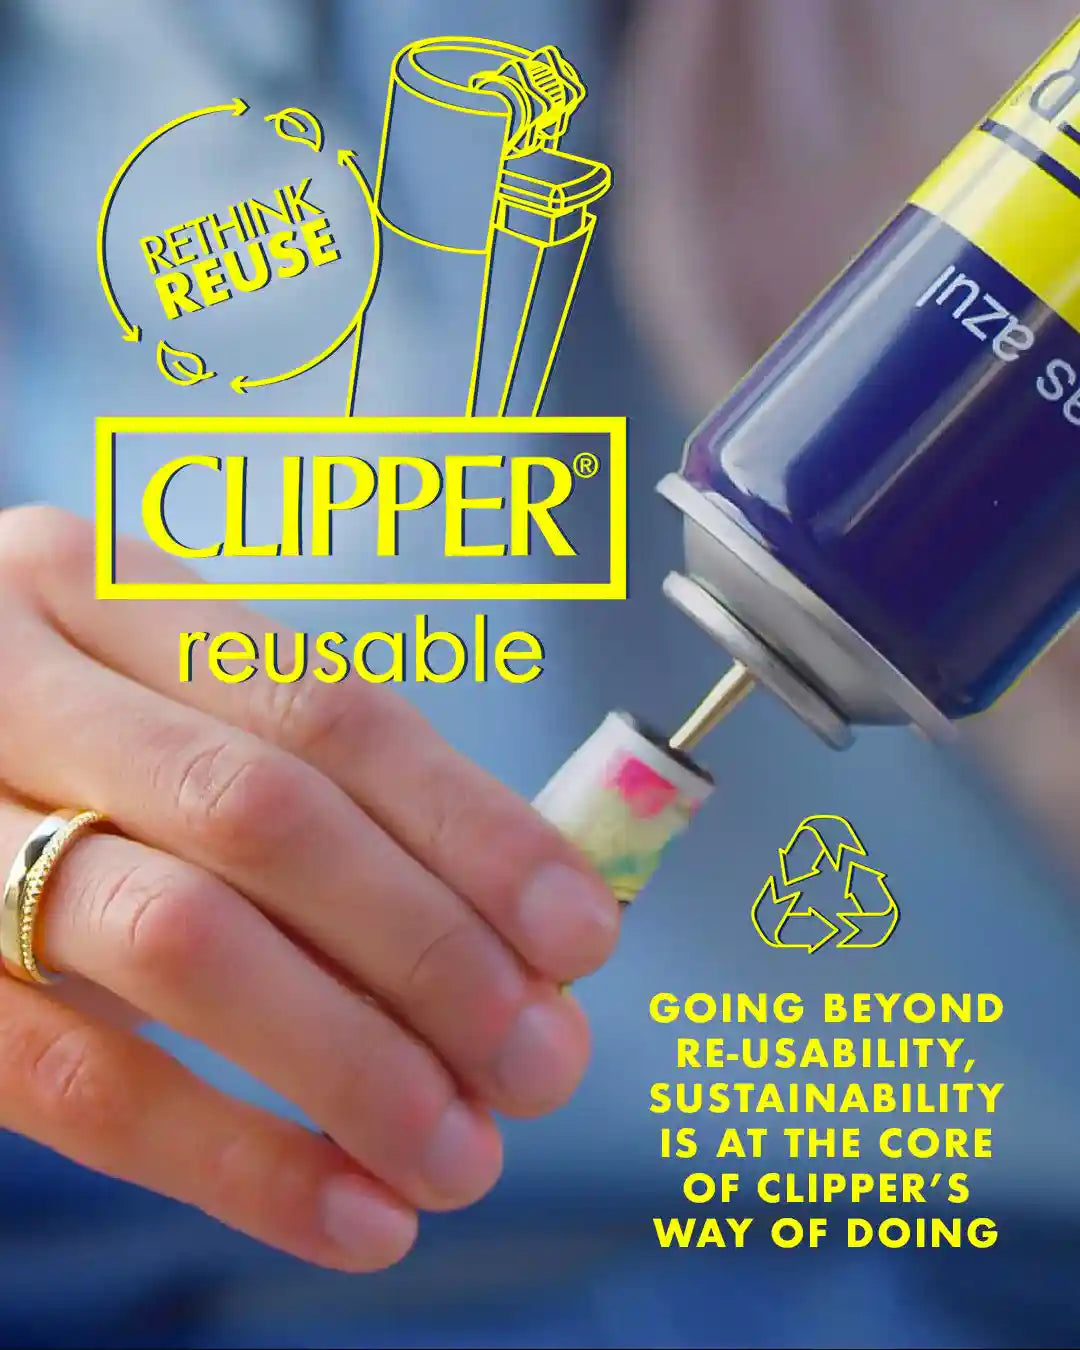 Clipper Reusable Lighter: Reusability Guide